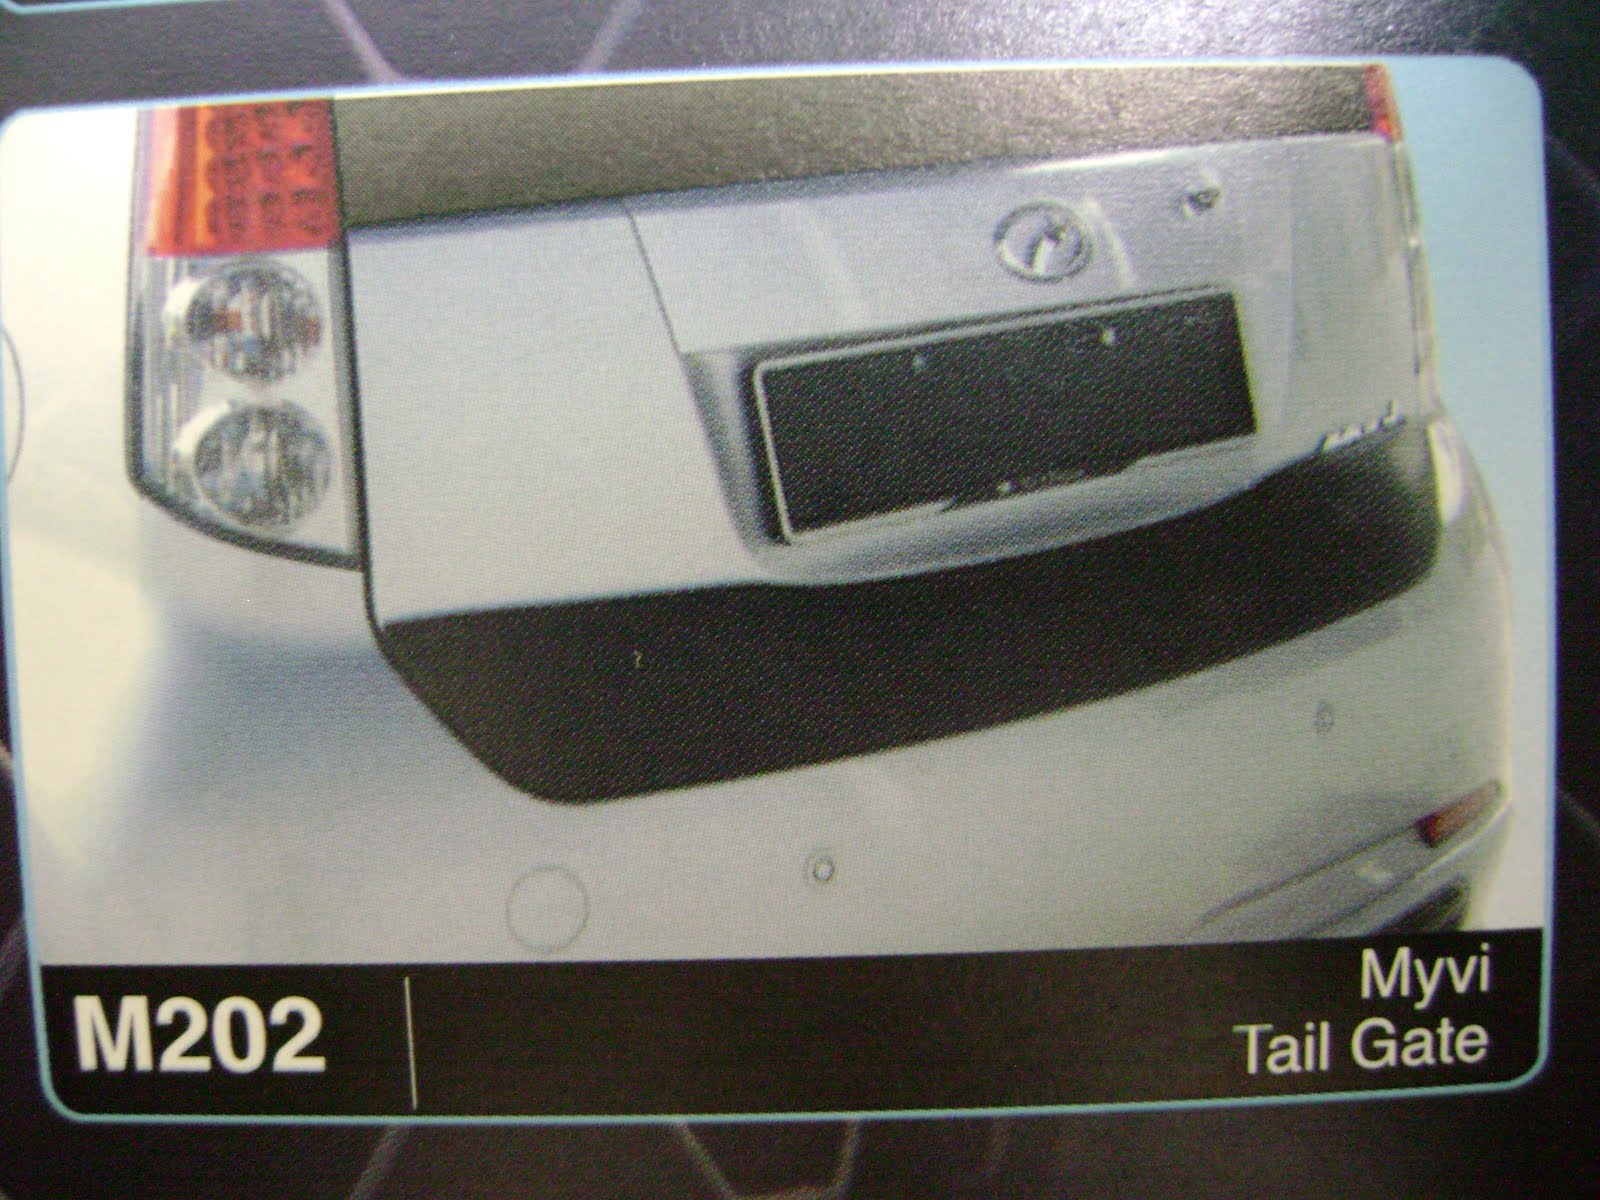 REV MOTORSPORT: myvi rear spoiler and tail gate panel cover.